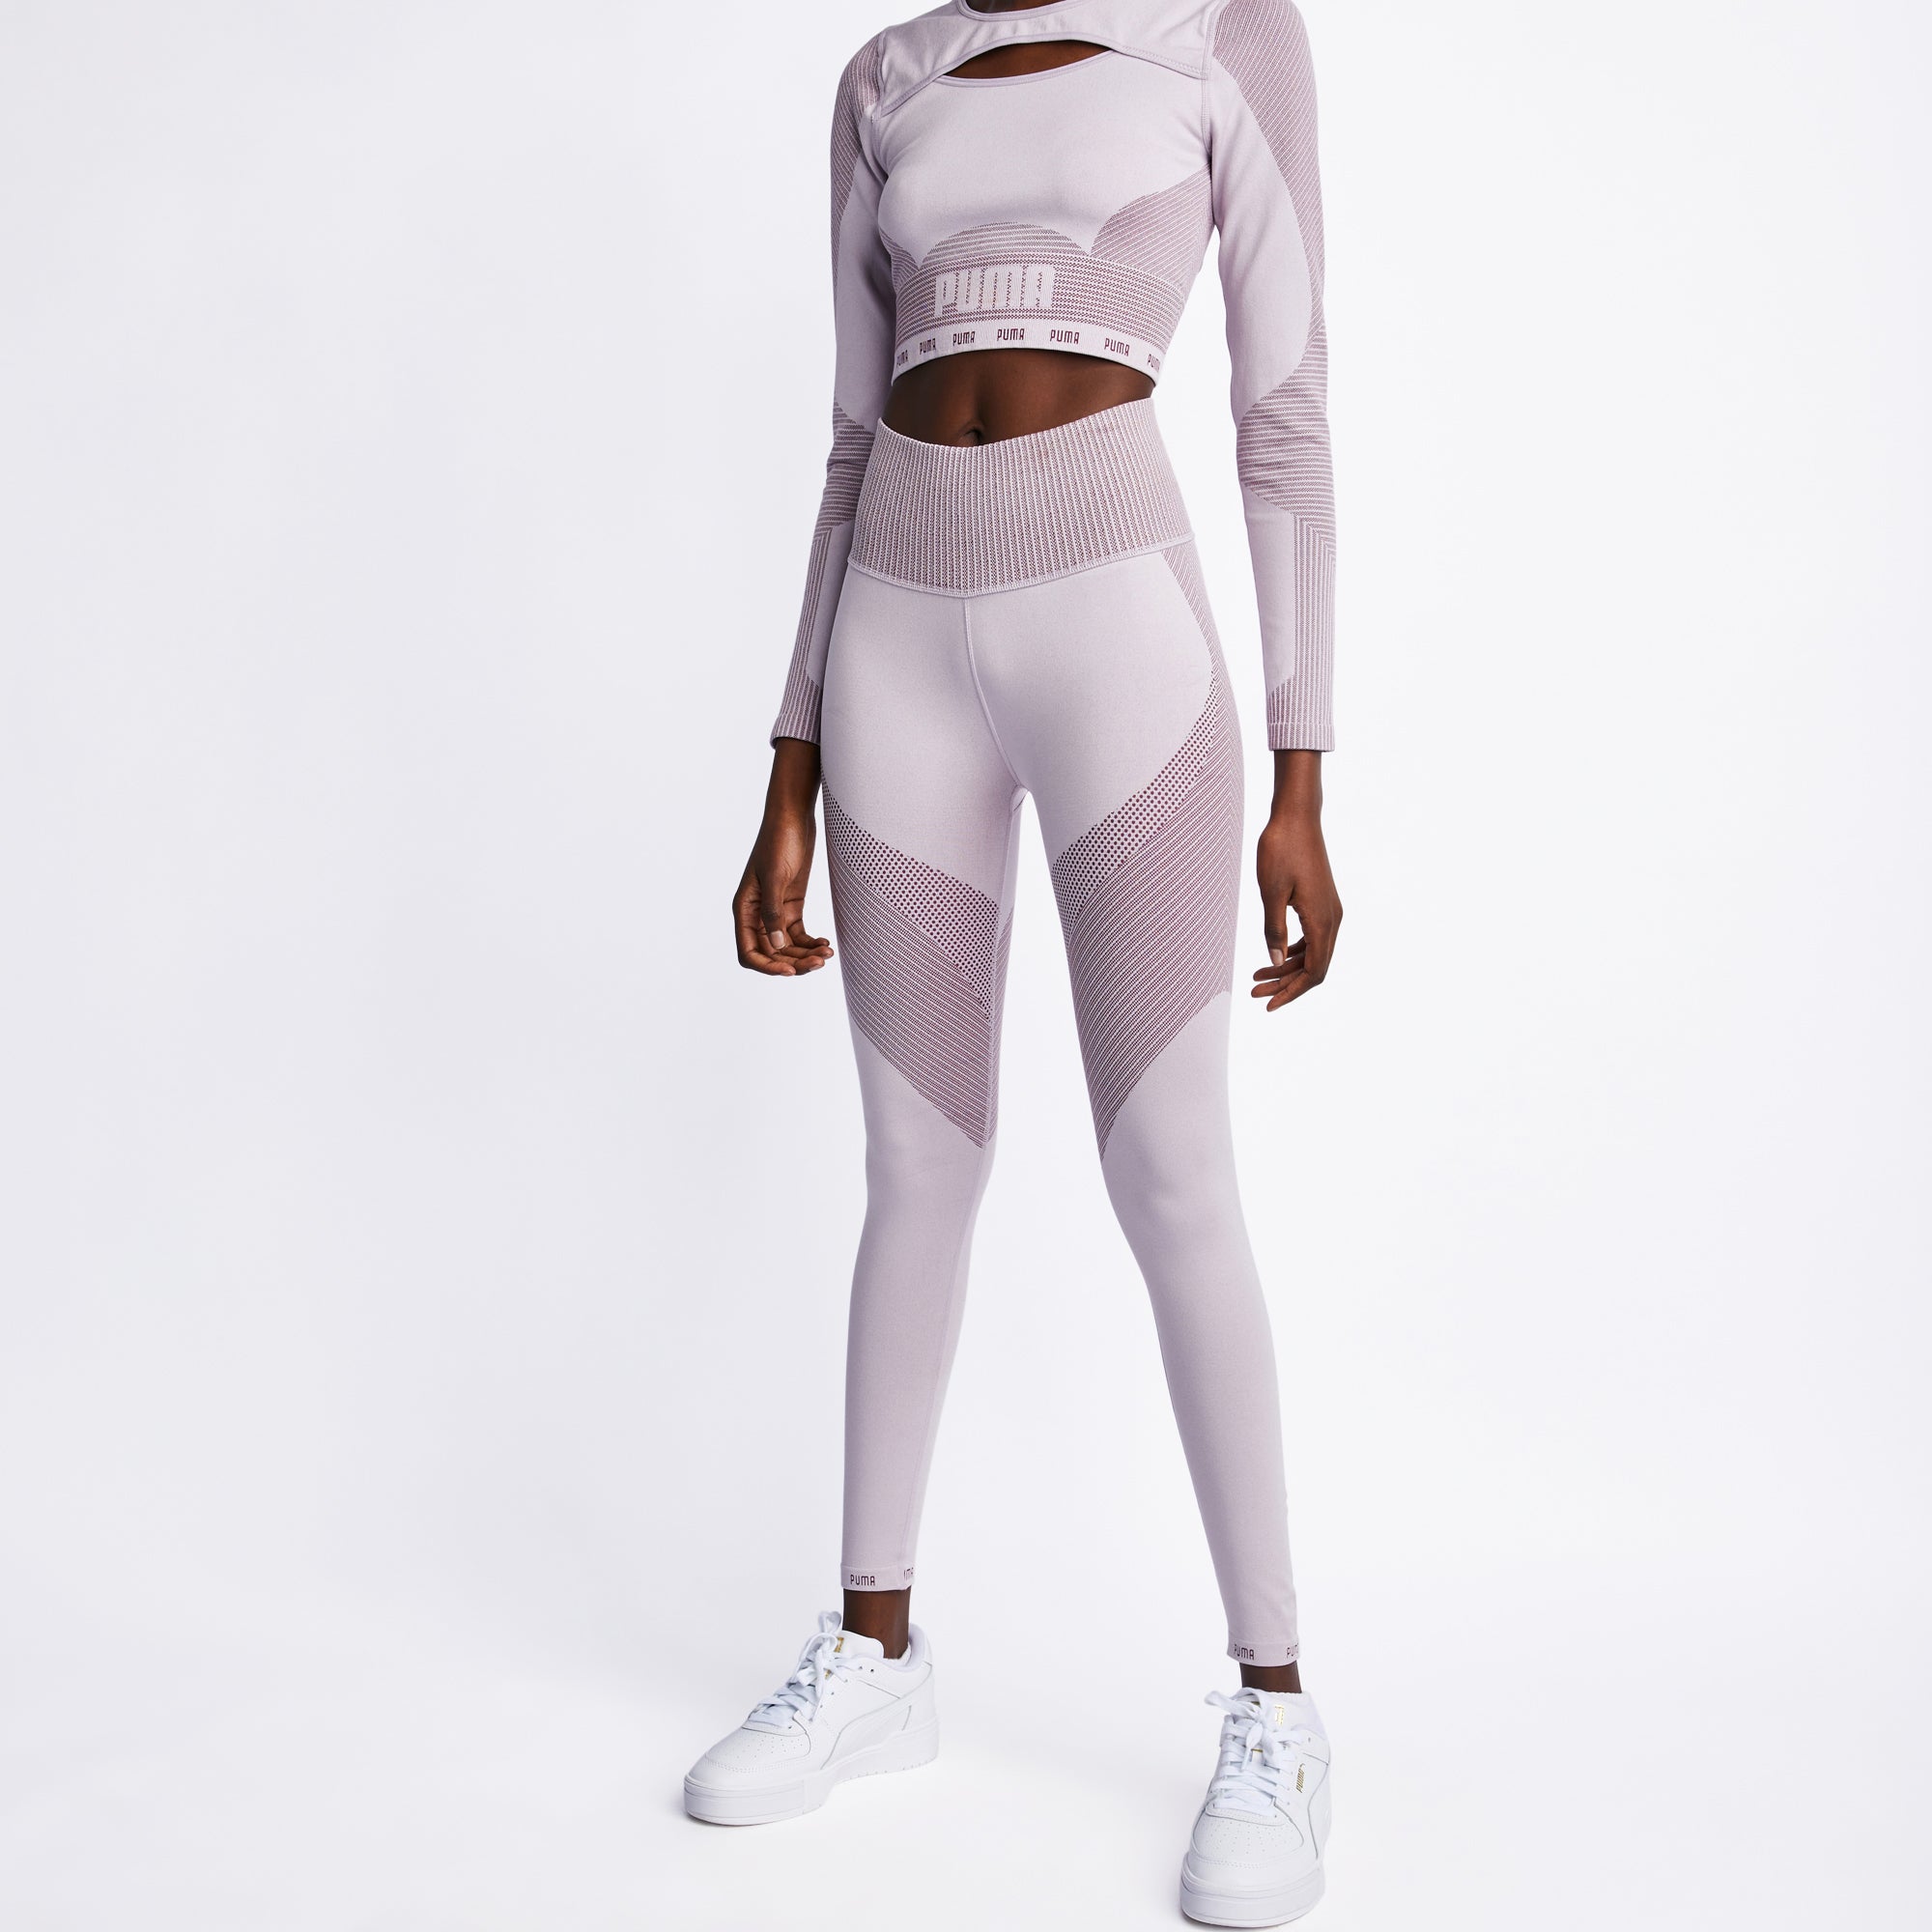 Givova Haut de costume sport femme + legging 3/4: en vente à 19.99